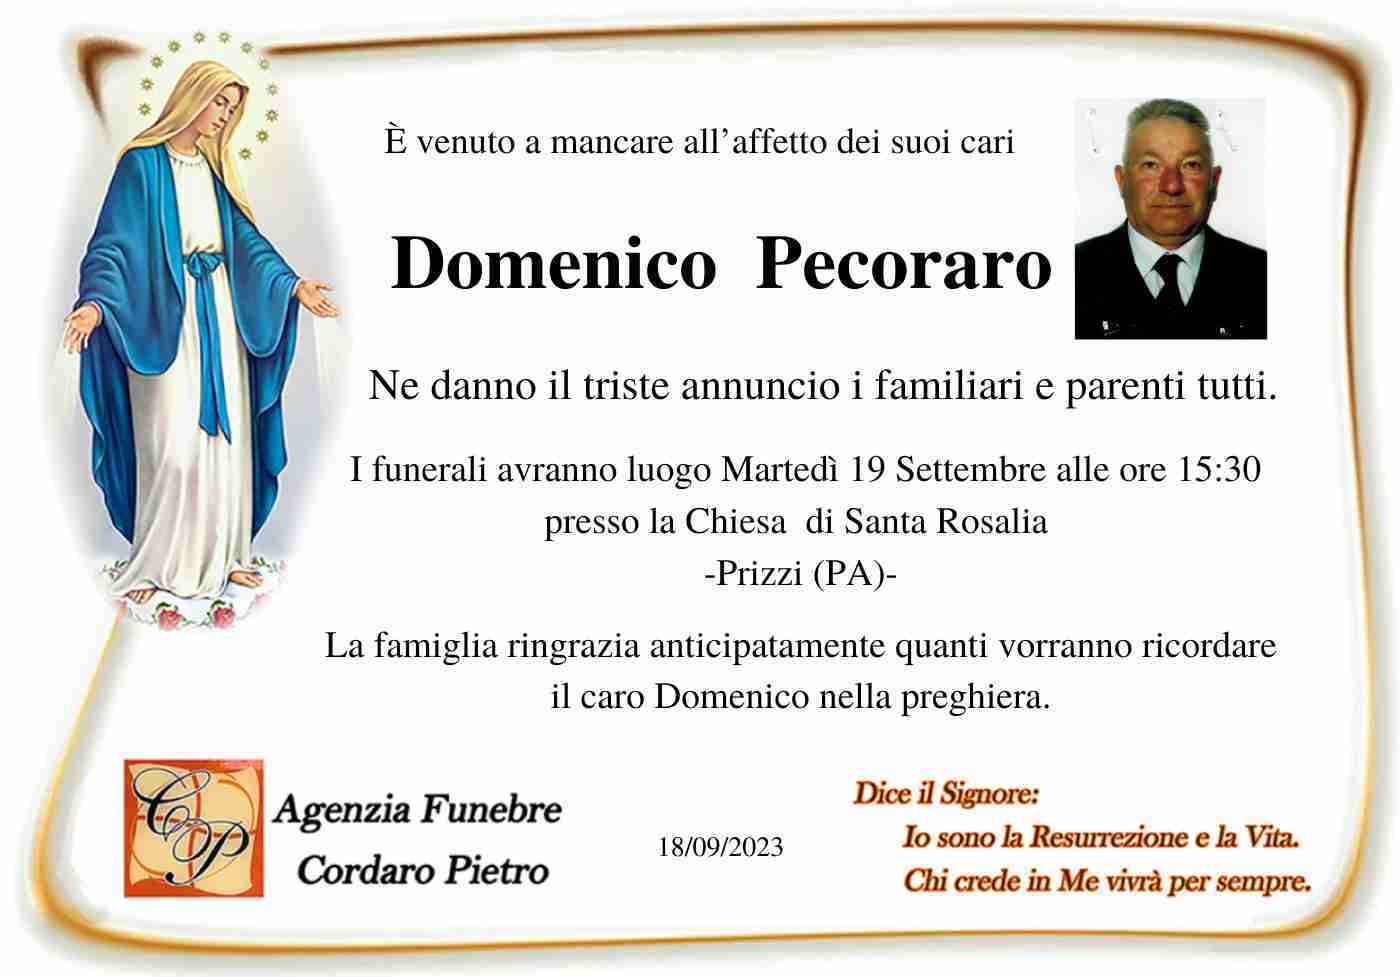 Domenico Pecoraro